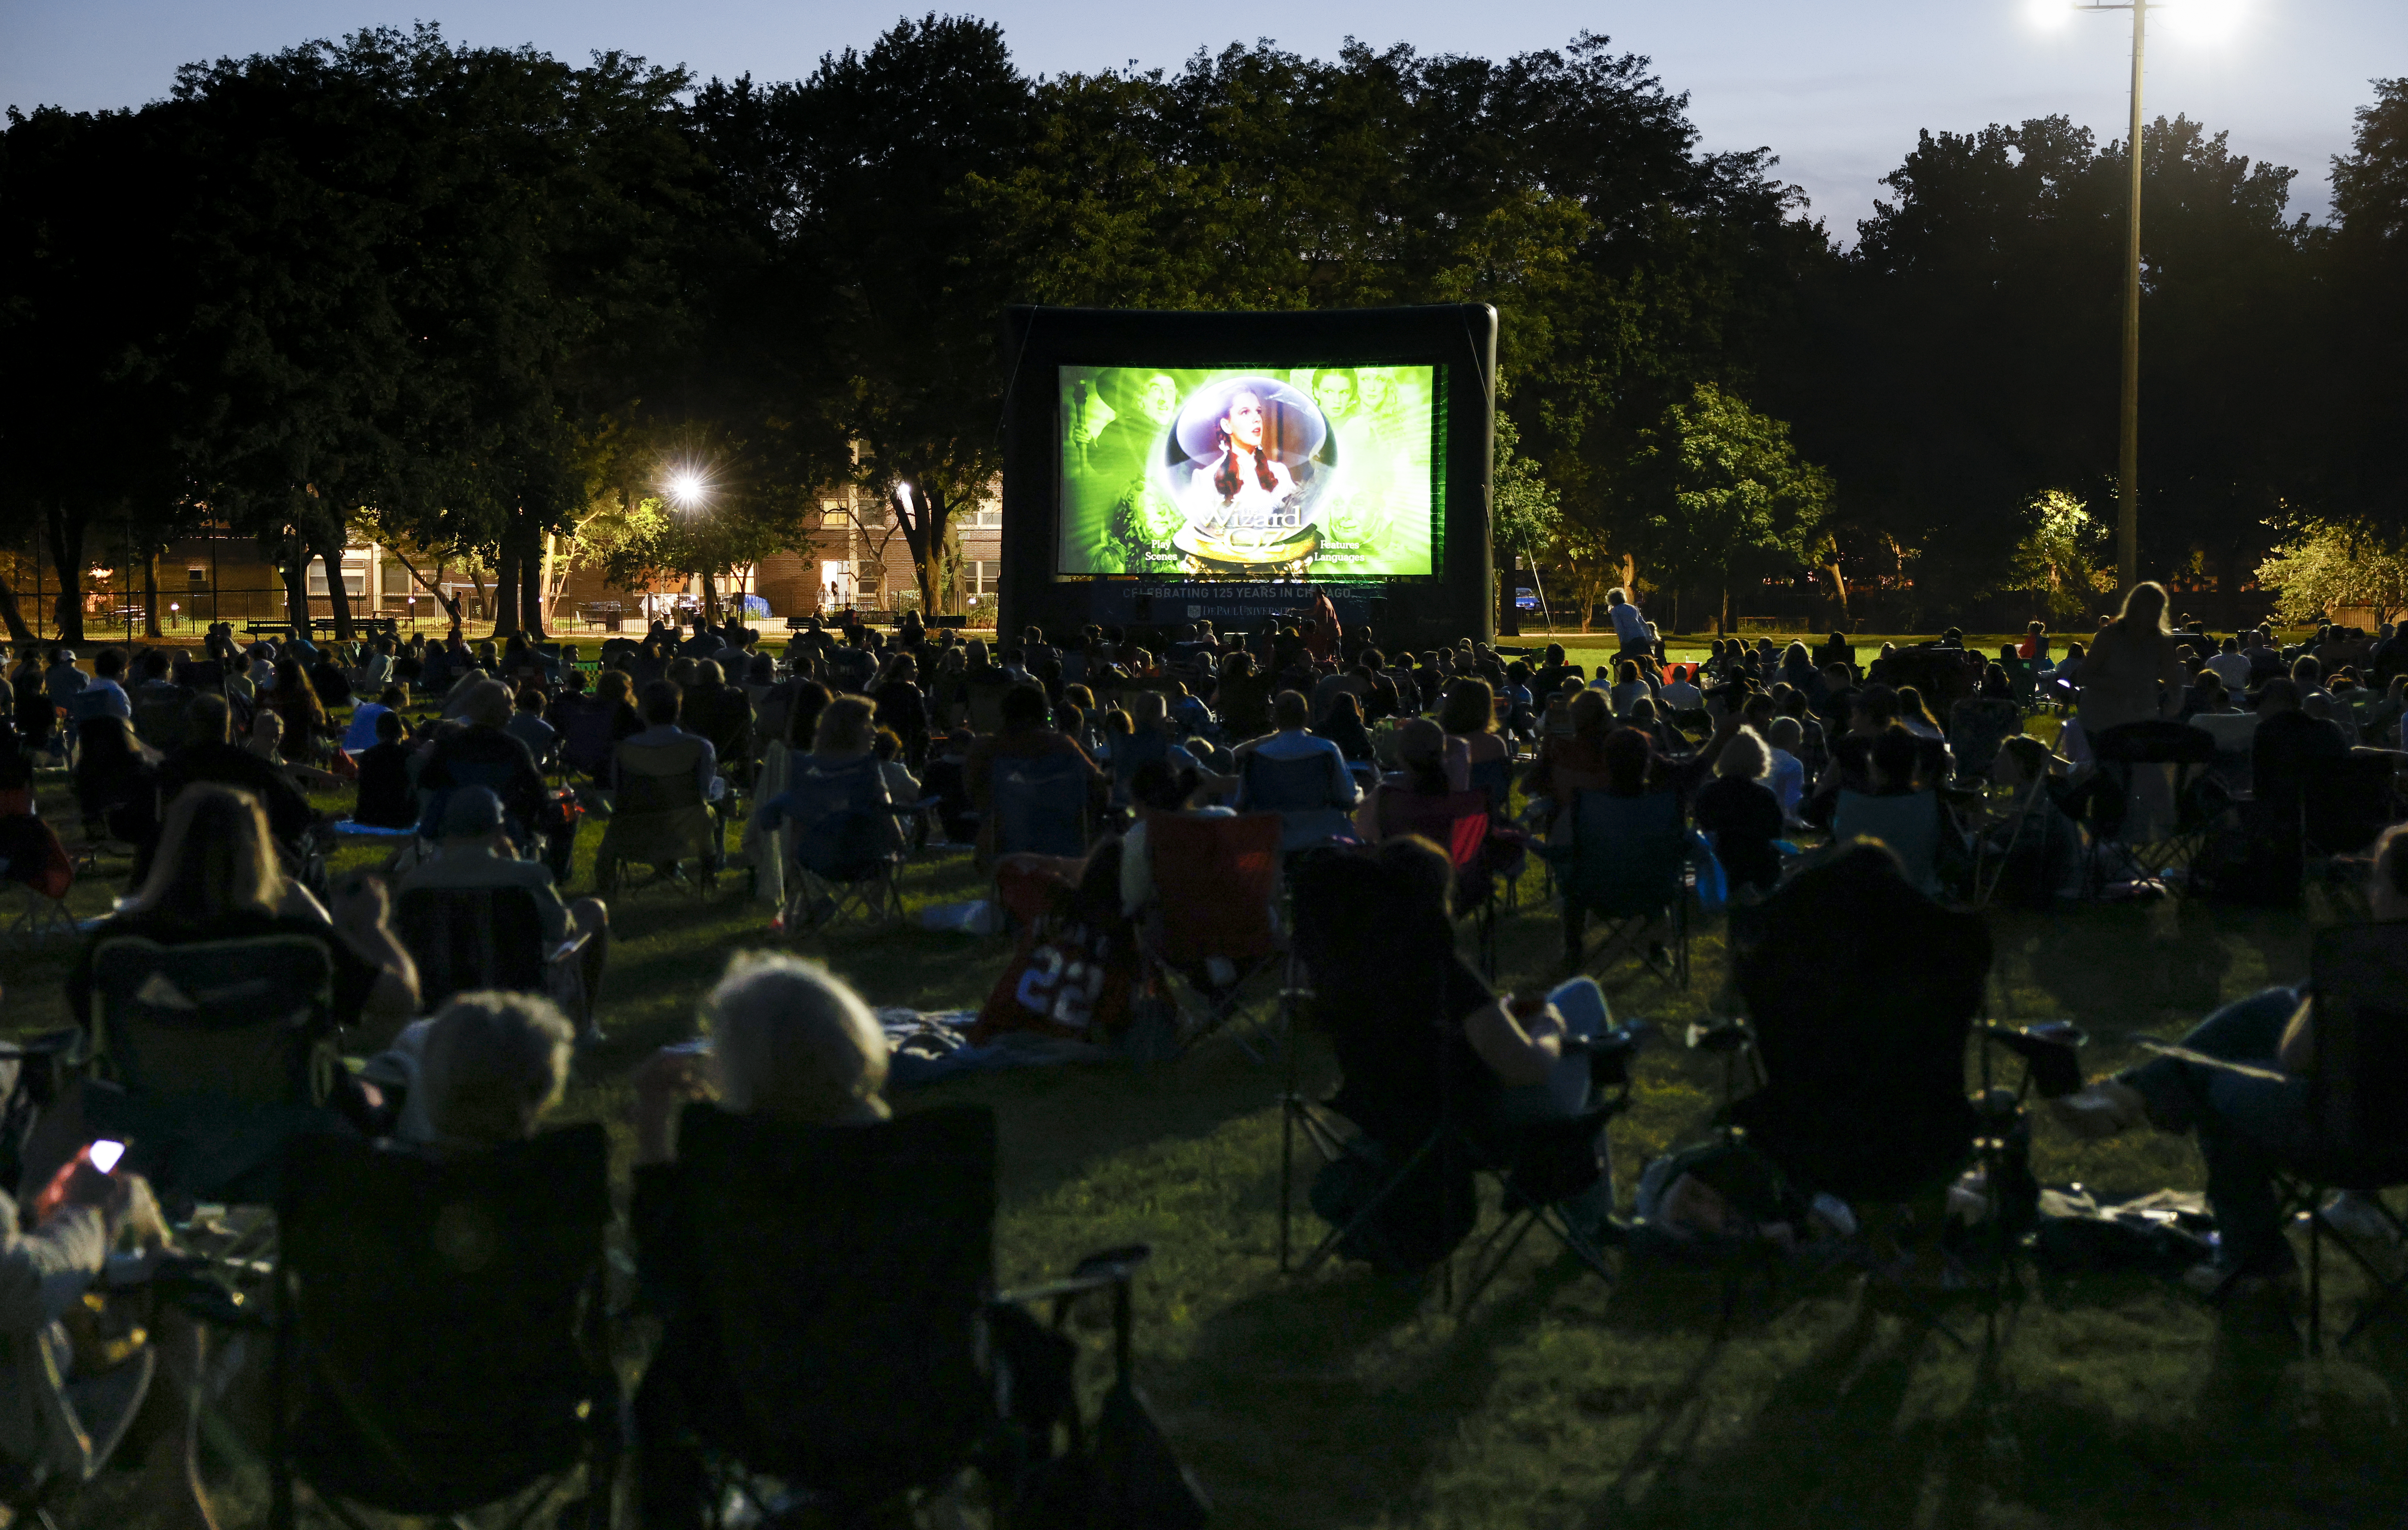 DePaul hosts Movies in the Park 